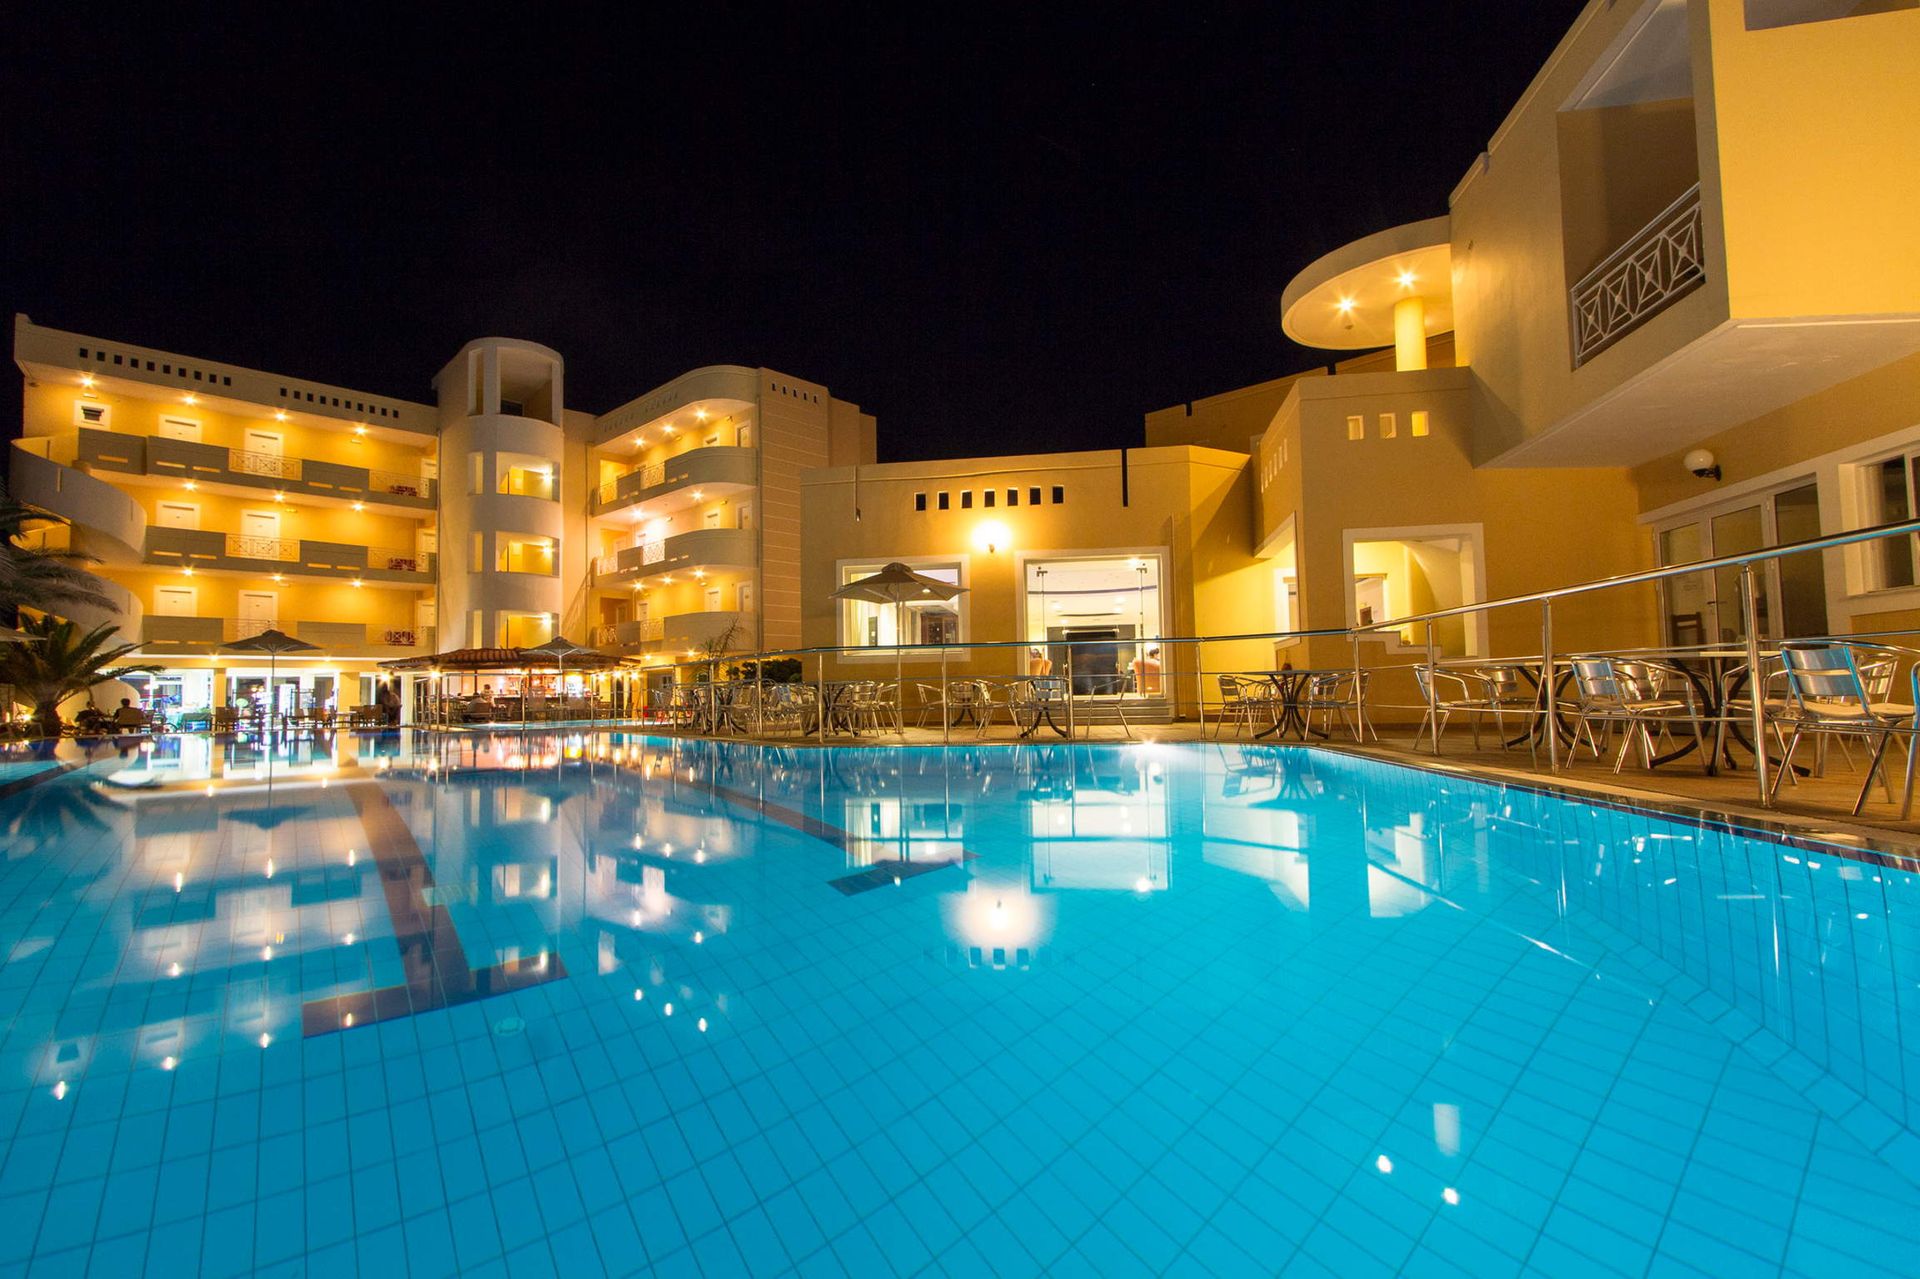 Sunny Bay Hotel - Κίσσαμος, Κρήτη ✦ 2 Ημέρες (1 Διανυκτέρευση) ✦ 2 άτομα + 1 παιδί έως 11 ετών ✦ 1 ✦ 01/05/2022 έως 30/09/2022 ✦ Μπροστά στην παραλία